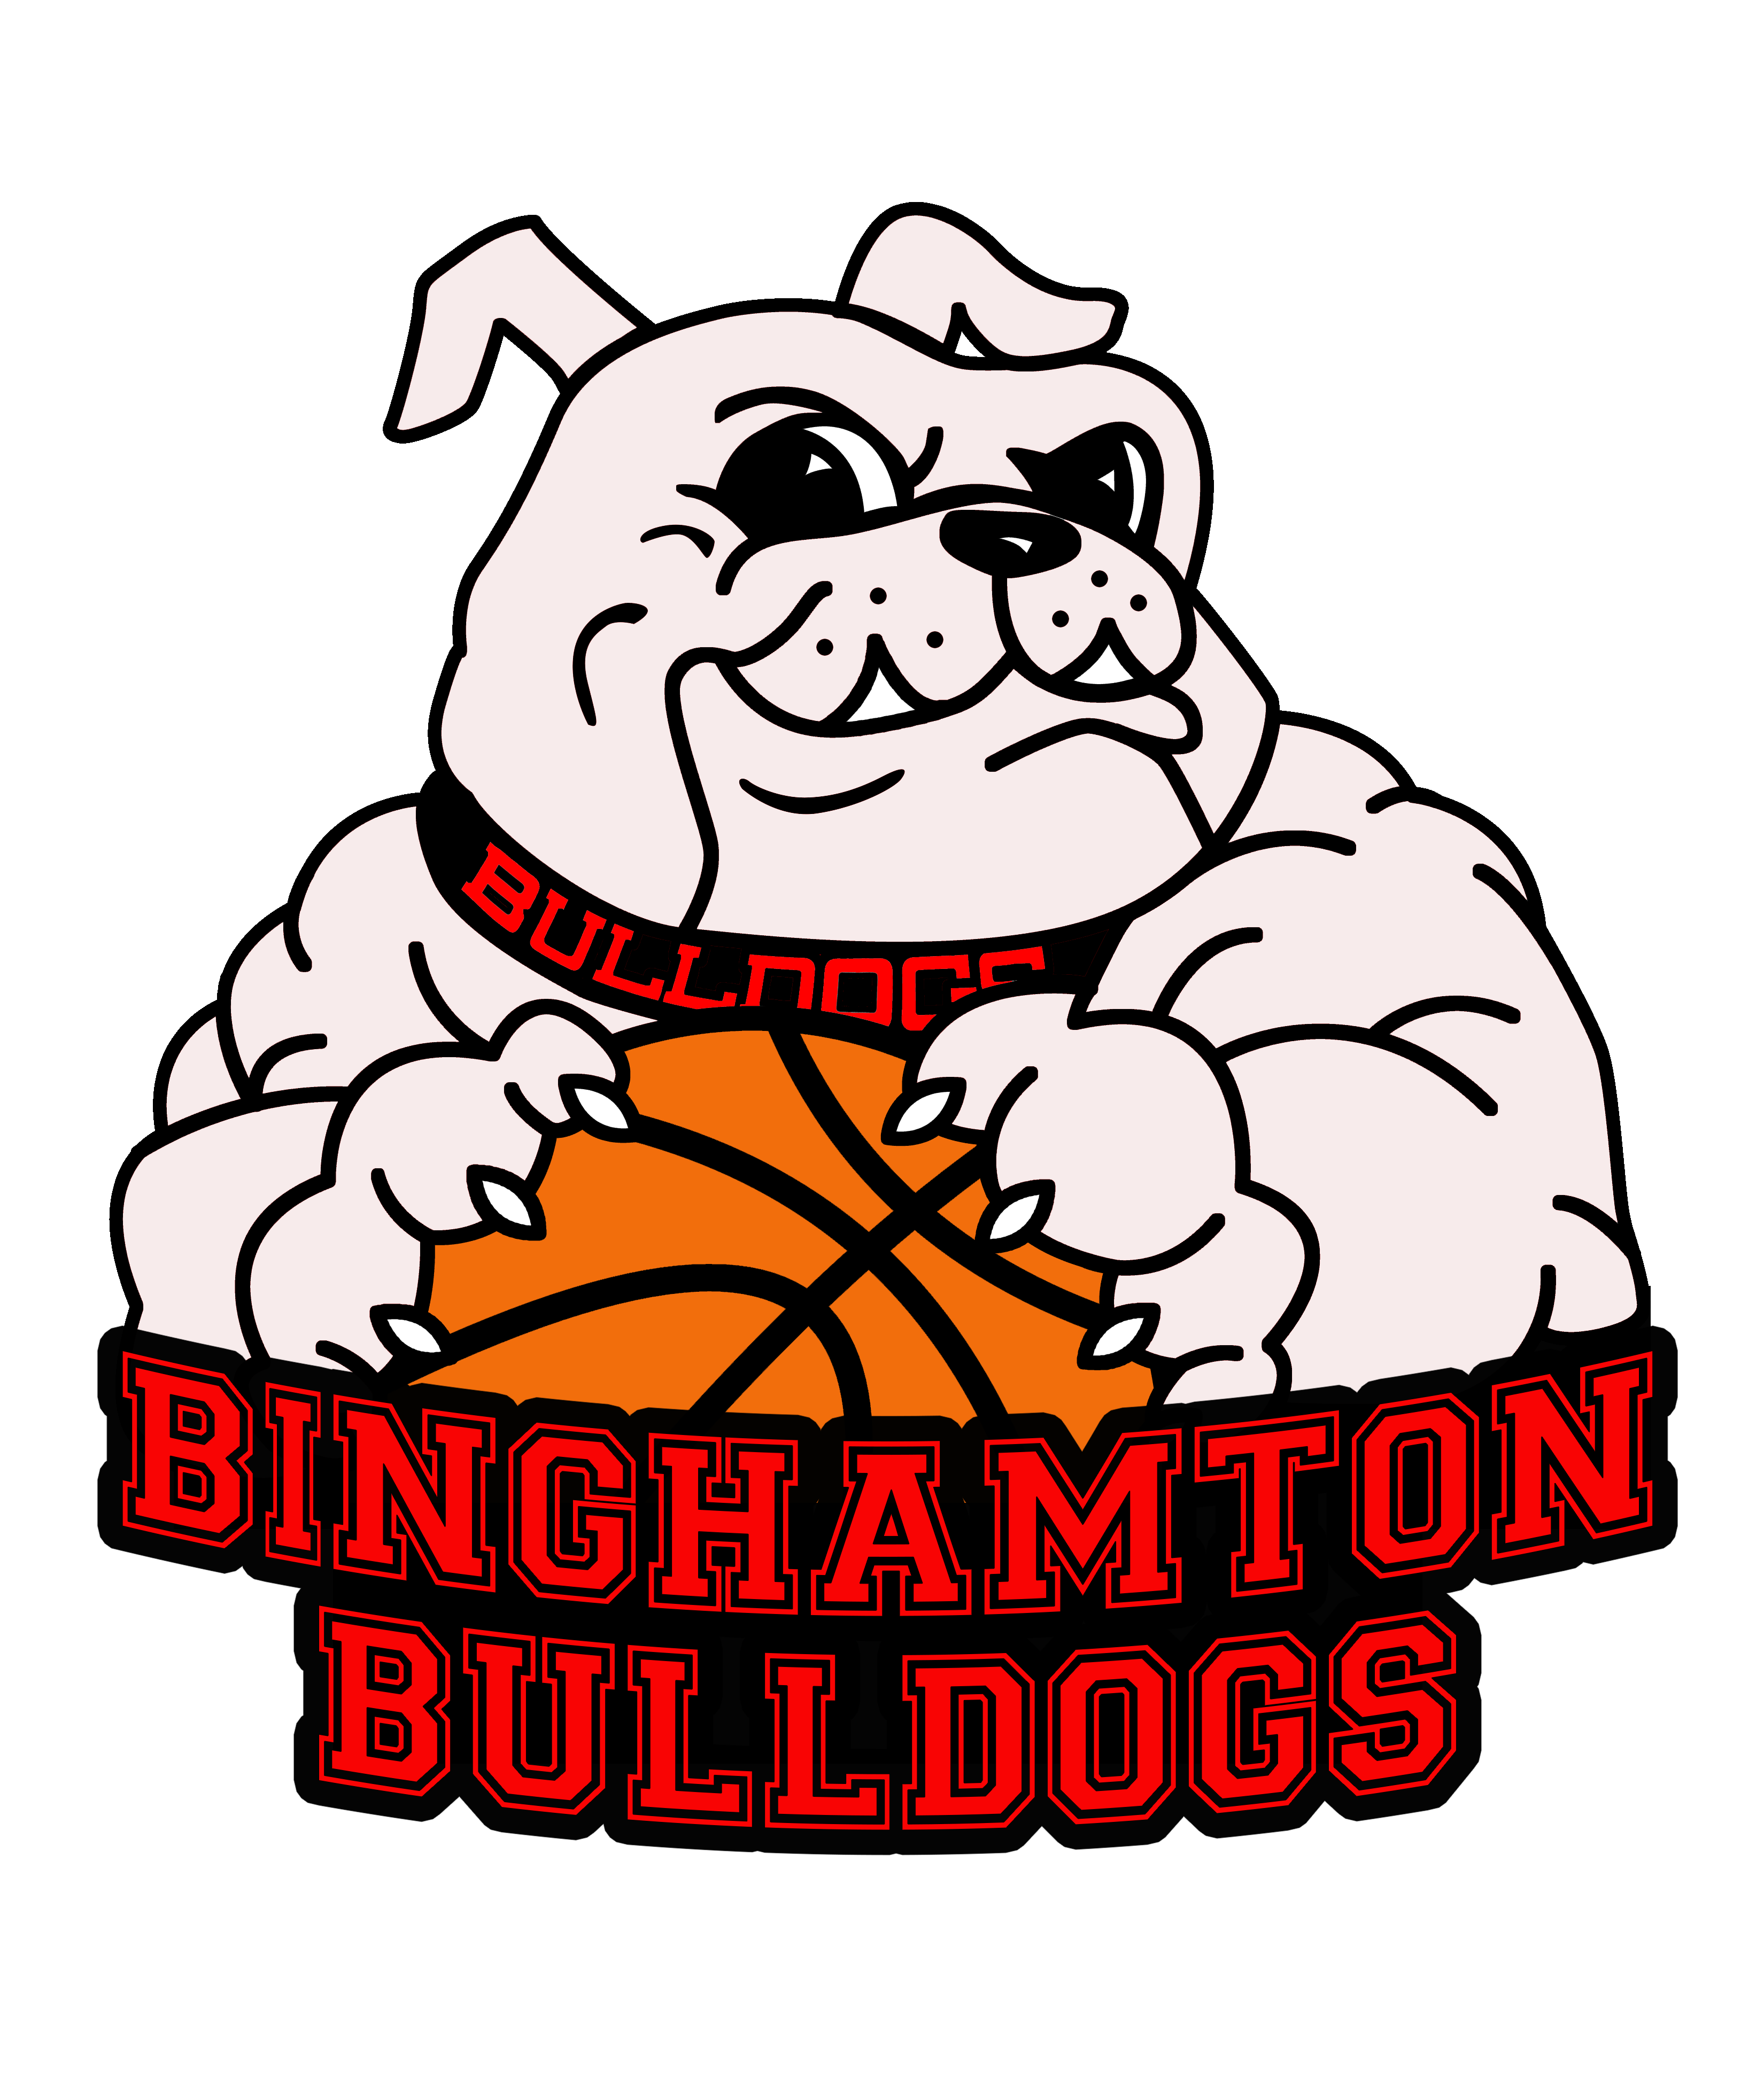 The Binghamton Bulldogs